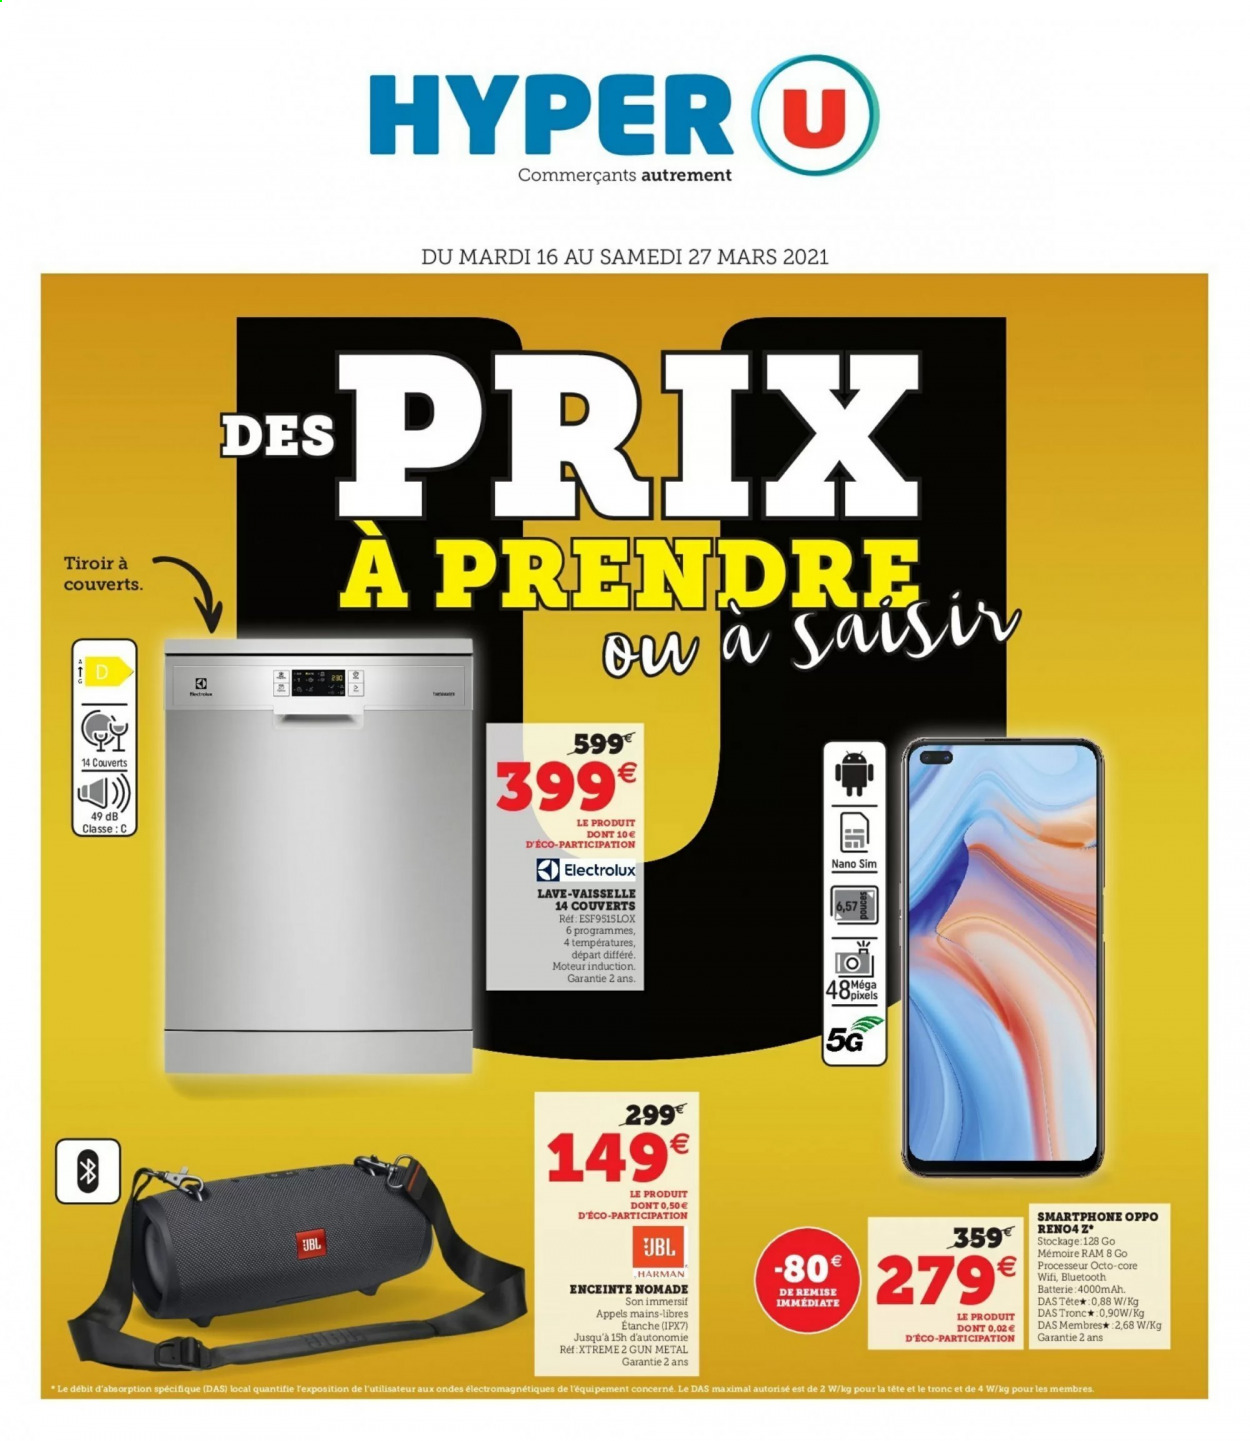 thumbnail - Catalogue HYPER U - 16/03/2021 - 27/03/2021 - Produits soldés - Electrolux, smartphone, Oppo, JBL, enceinte, enceinte bluetooth. Page 1.